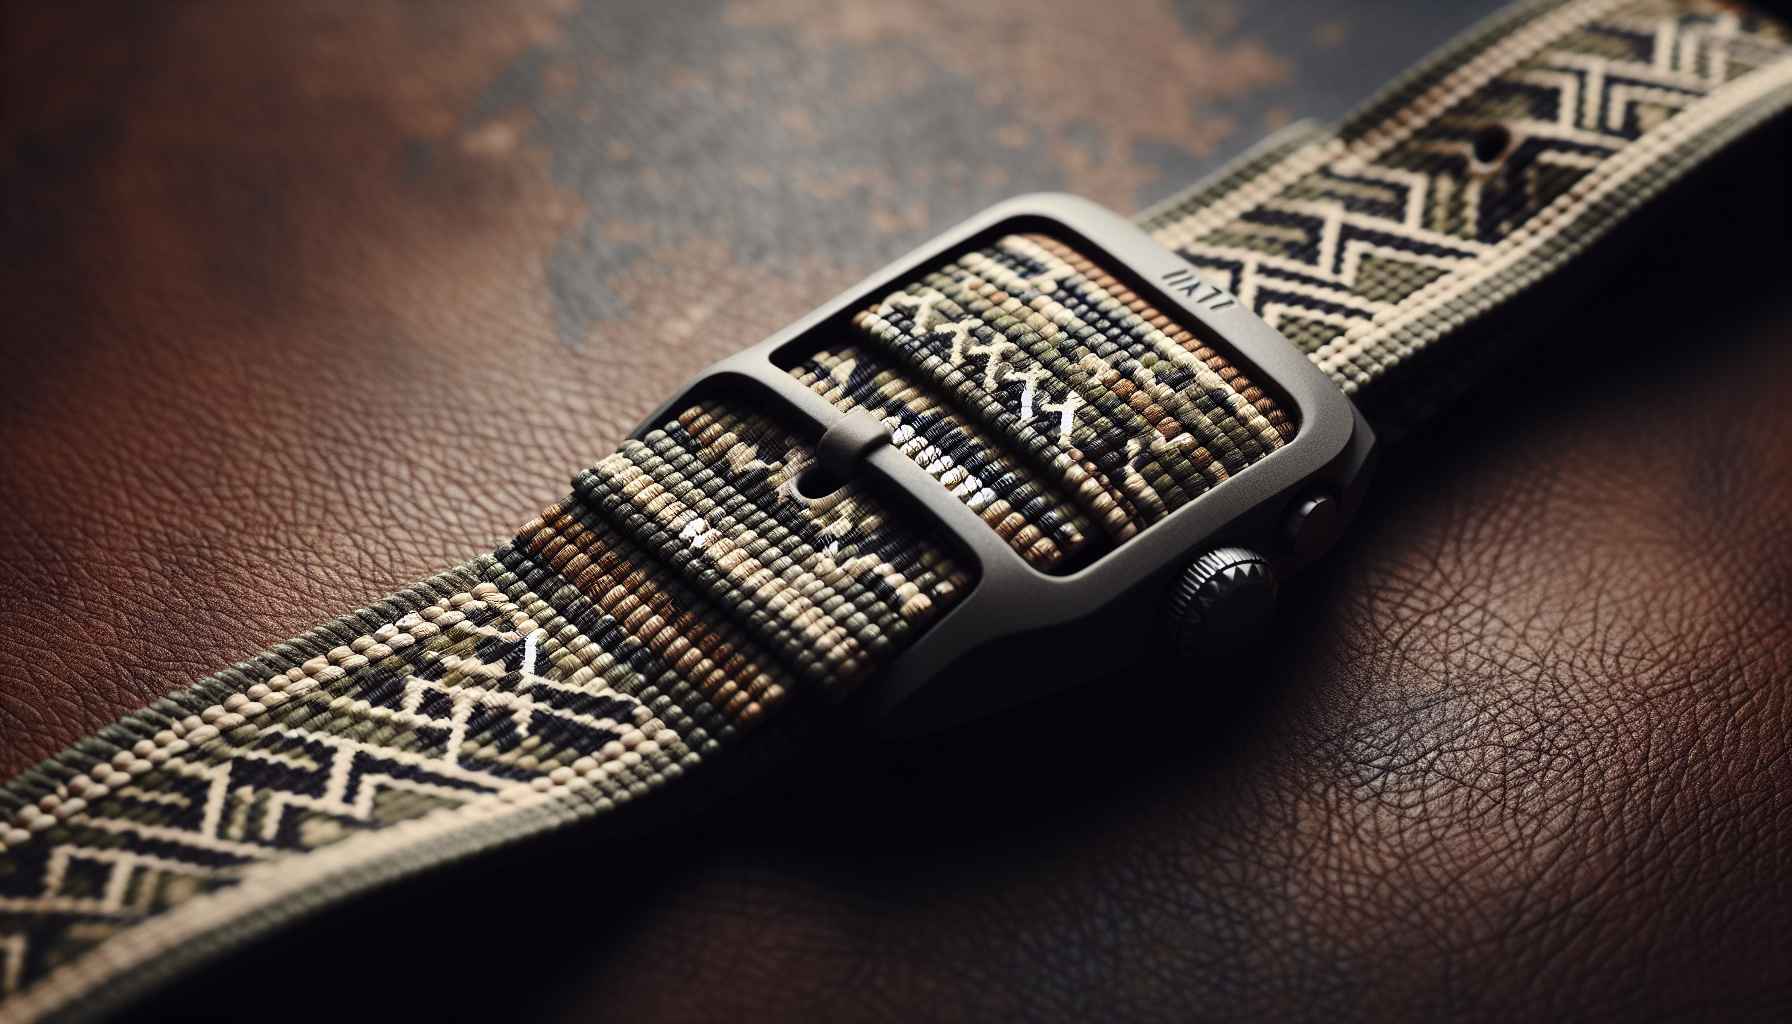 Customized NATO strap with a classic design